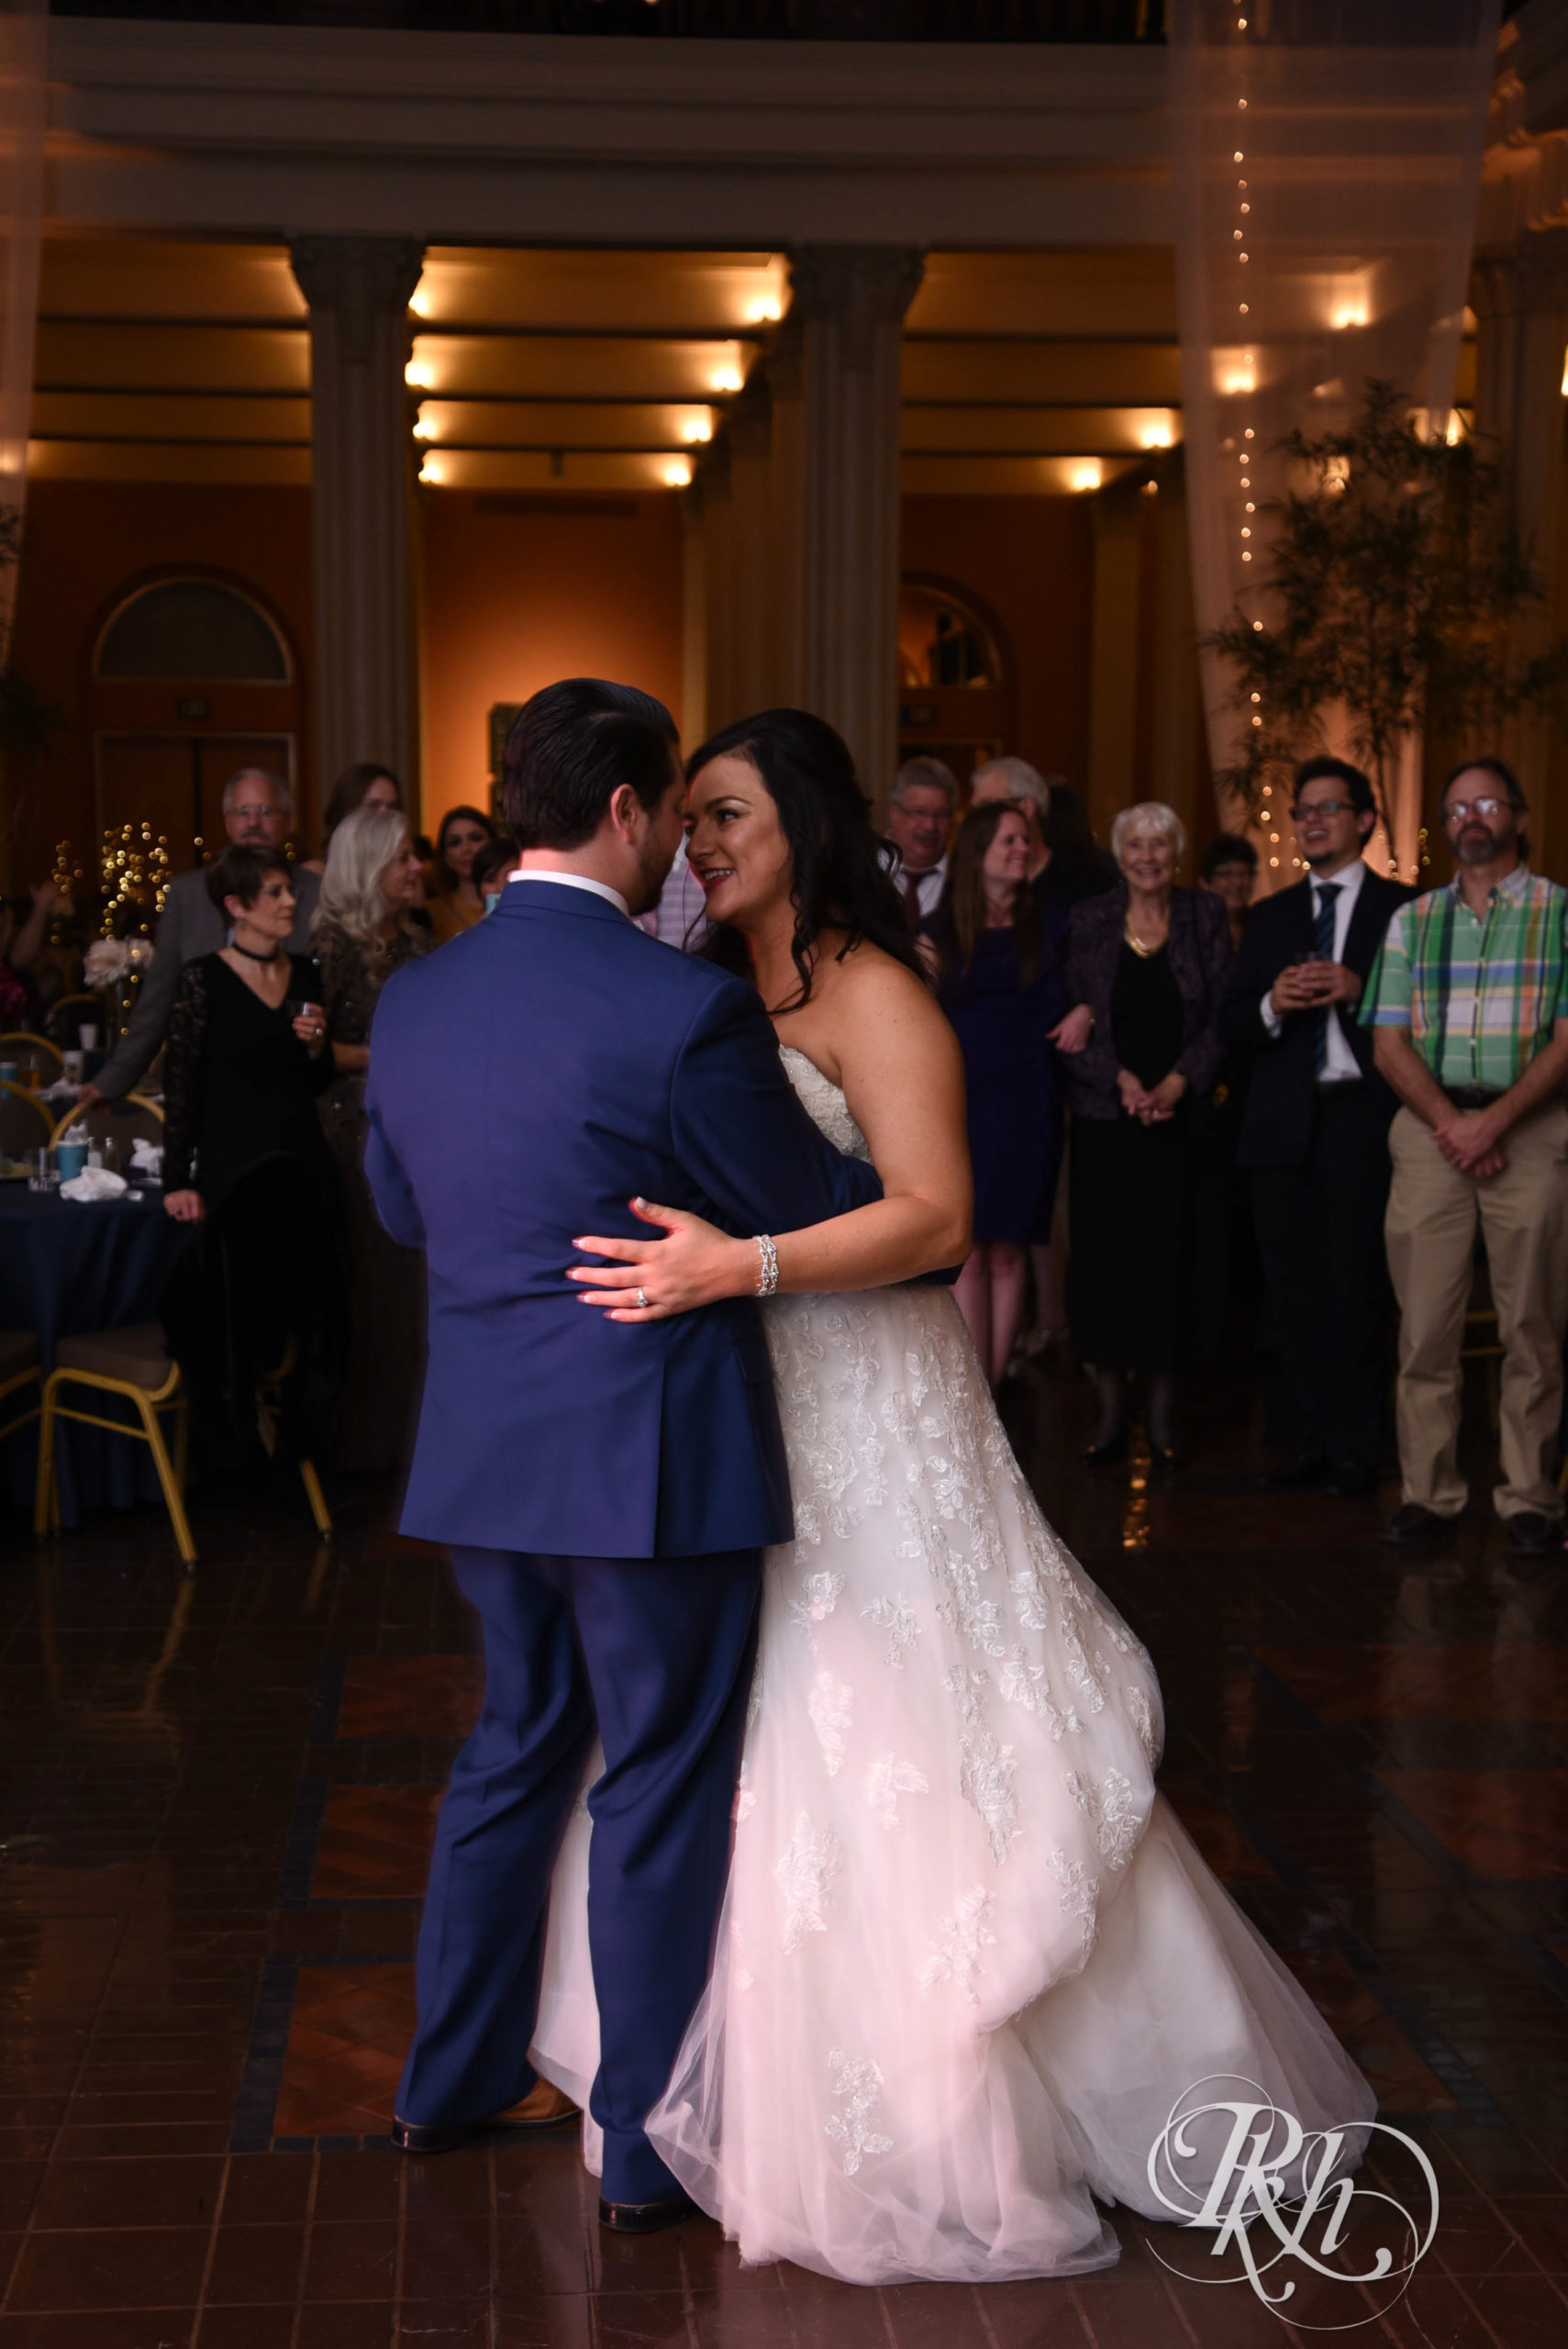 Bride and groom share first dance on wedding day at Landmark Center in Saint Paul, Minnesota.